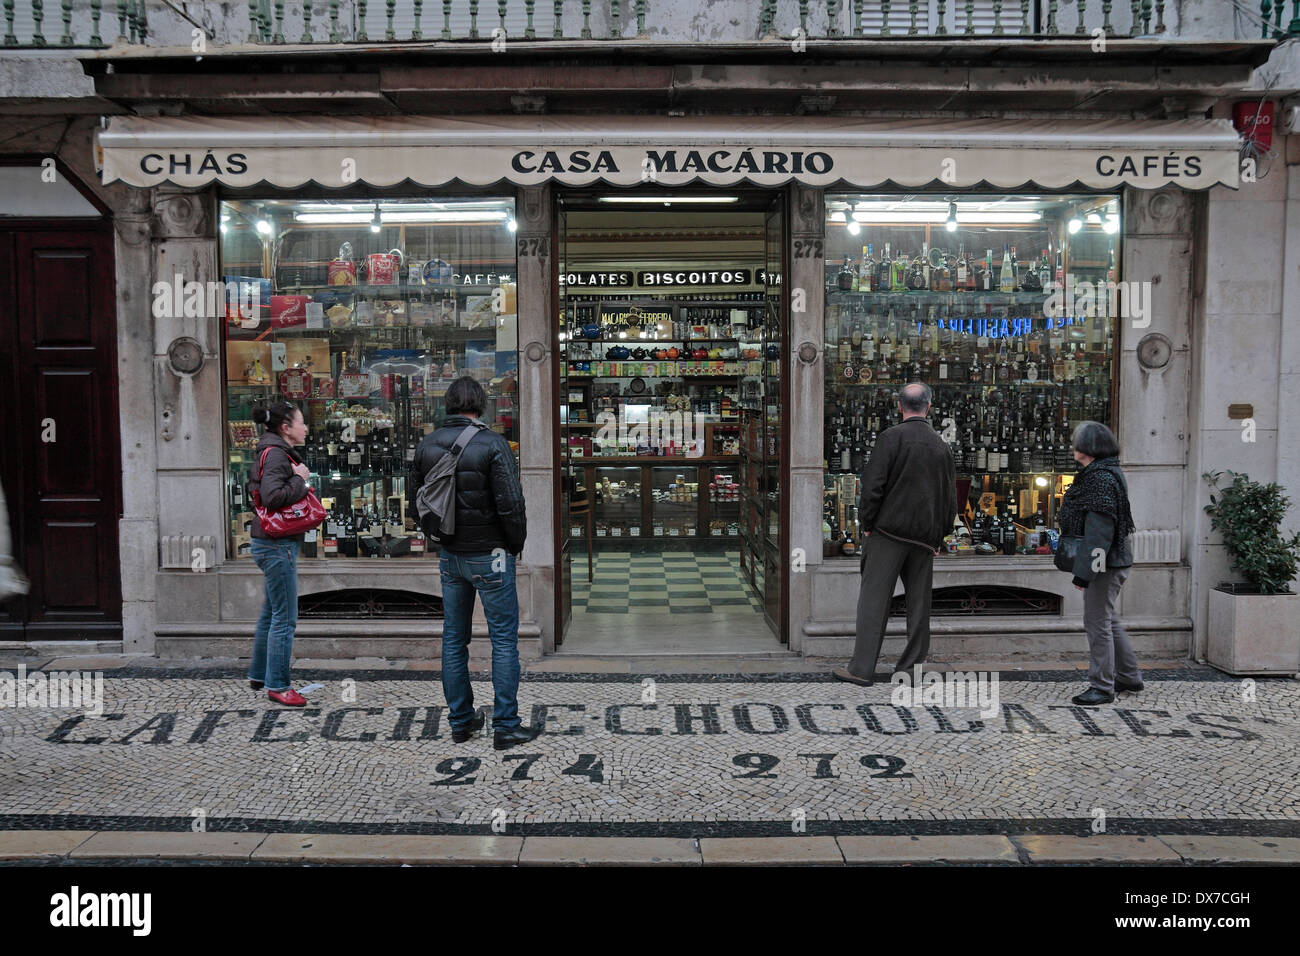 The Caso Macario port and wine shop on Rua Augusta 272/274, Baixa, Lisbon, Portugal. Stock Photo